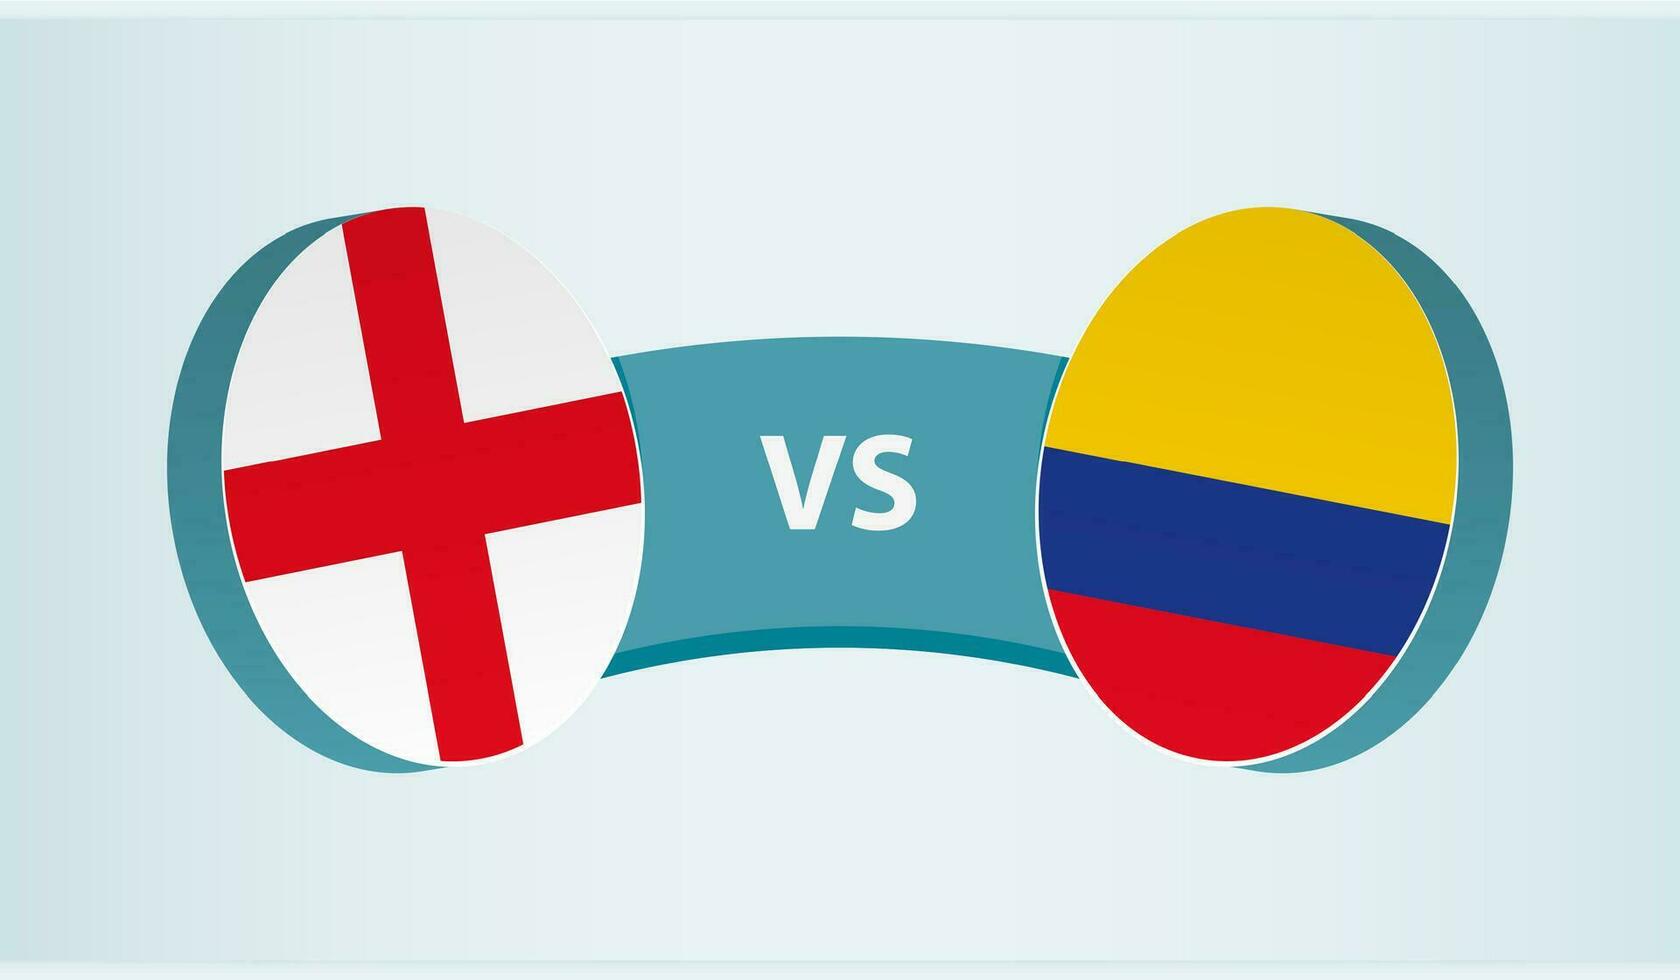 England mot colombia, team sporter konkurrens begrepp. vektor